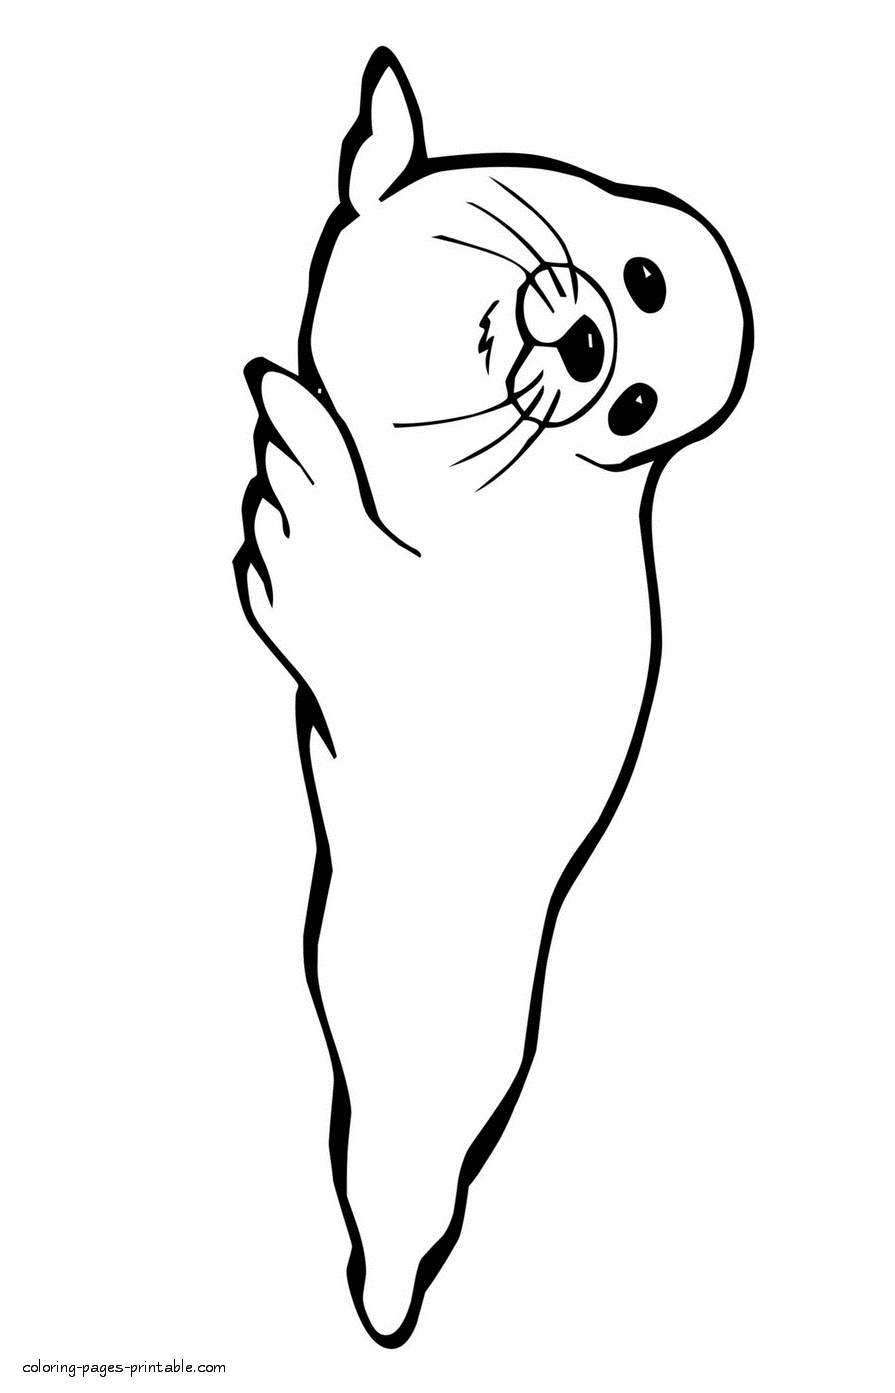 Harbor seal coloring page COLORINGPAGESPRINTABLECOM